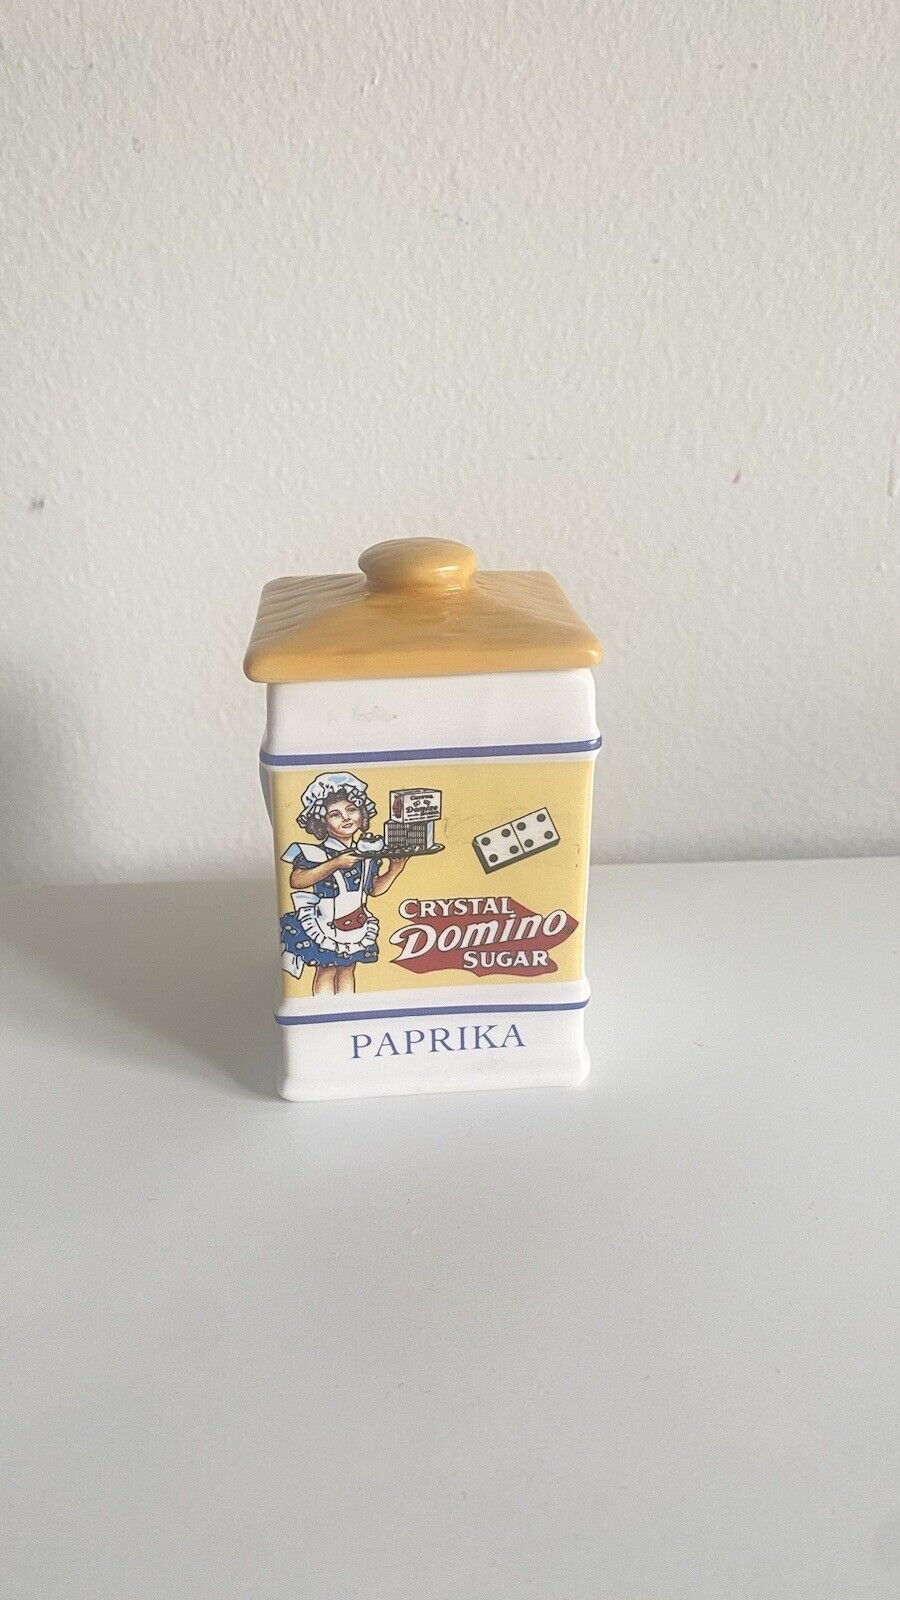 Domino Crystal Sugar Paprika Jar The Country Store Spice Jar 1992 Franklin Mint